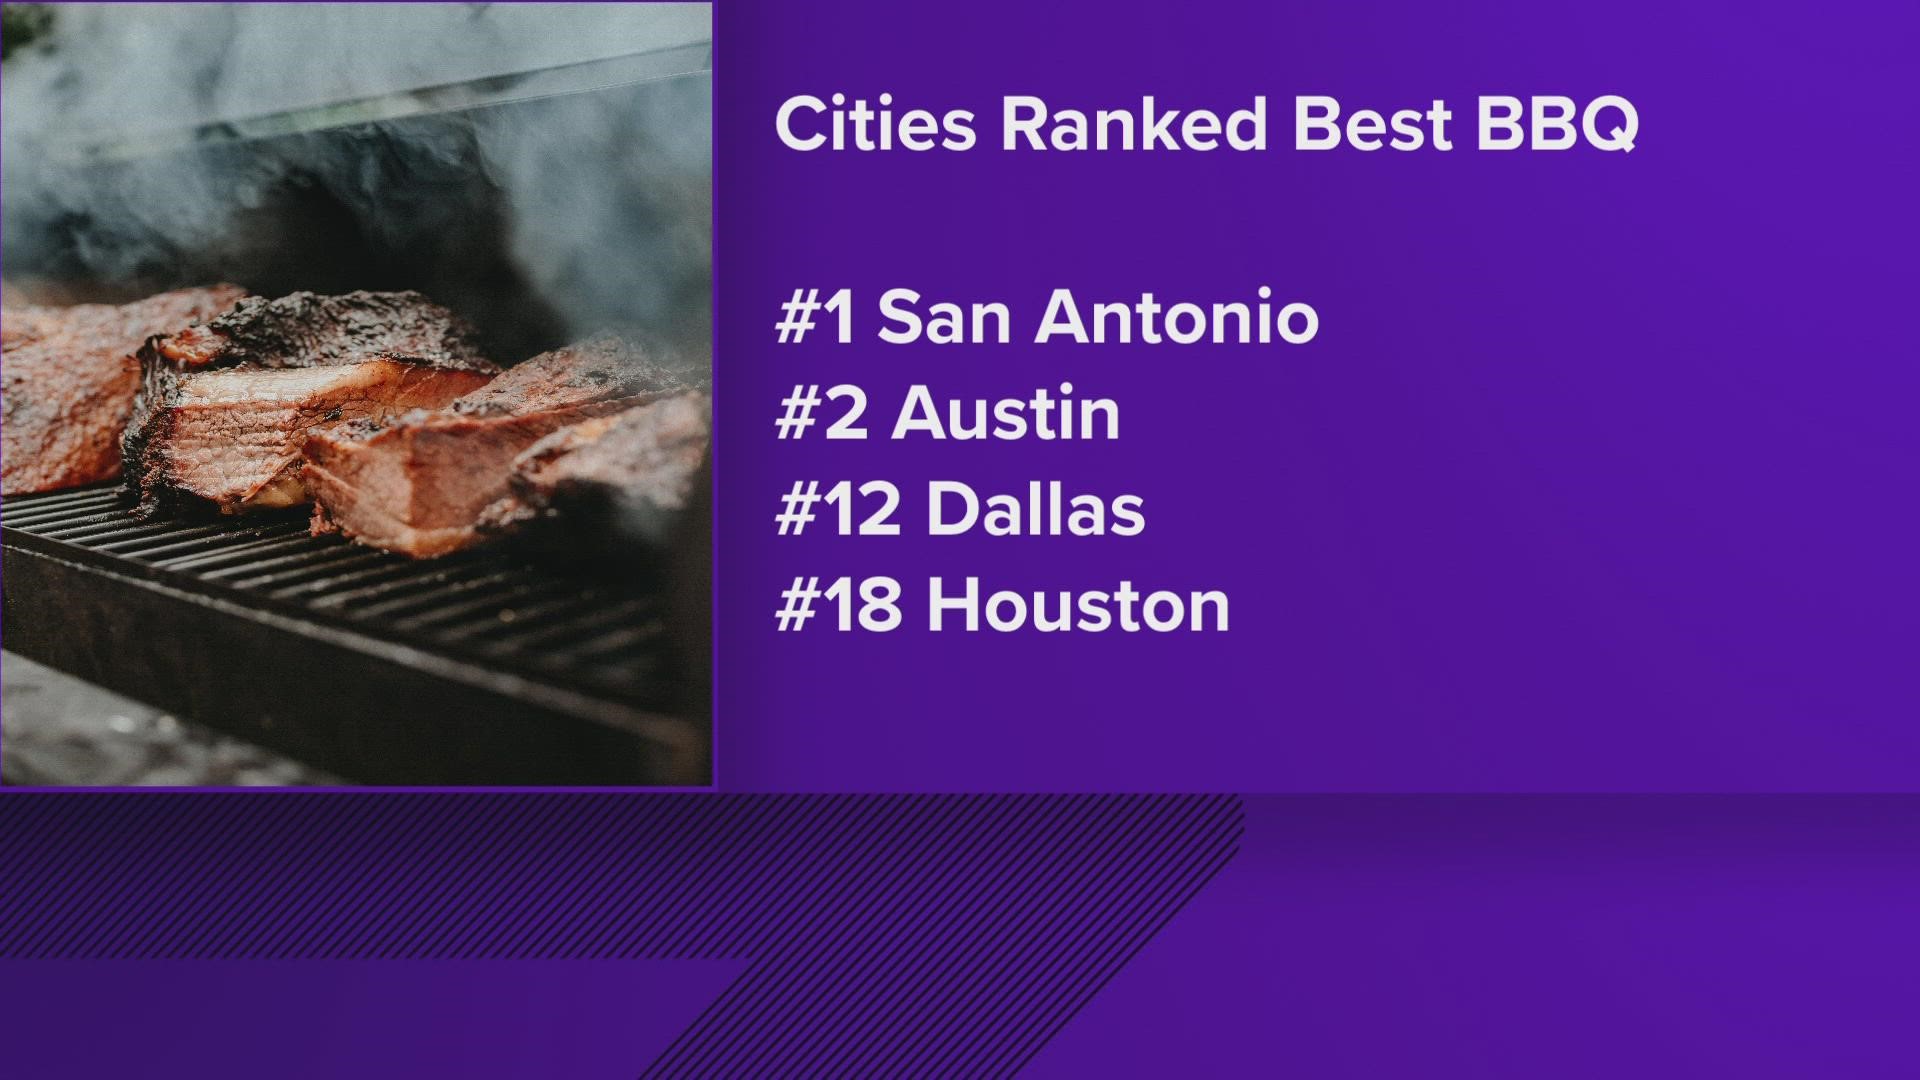 Dallas took the 12th-place spot.